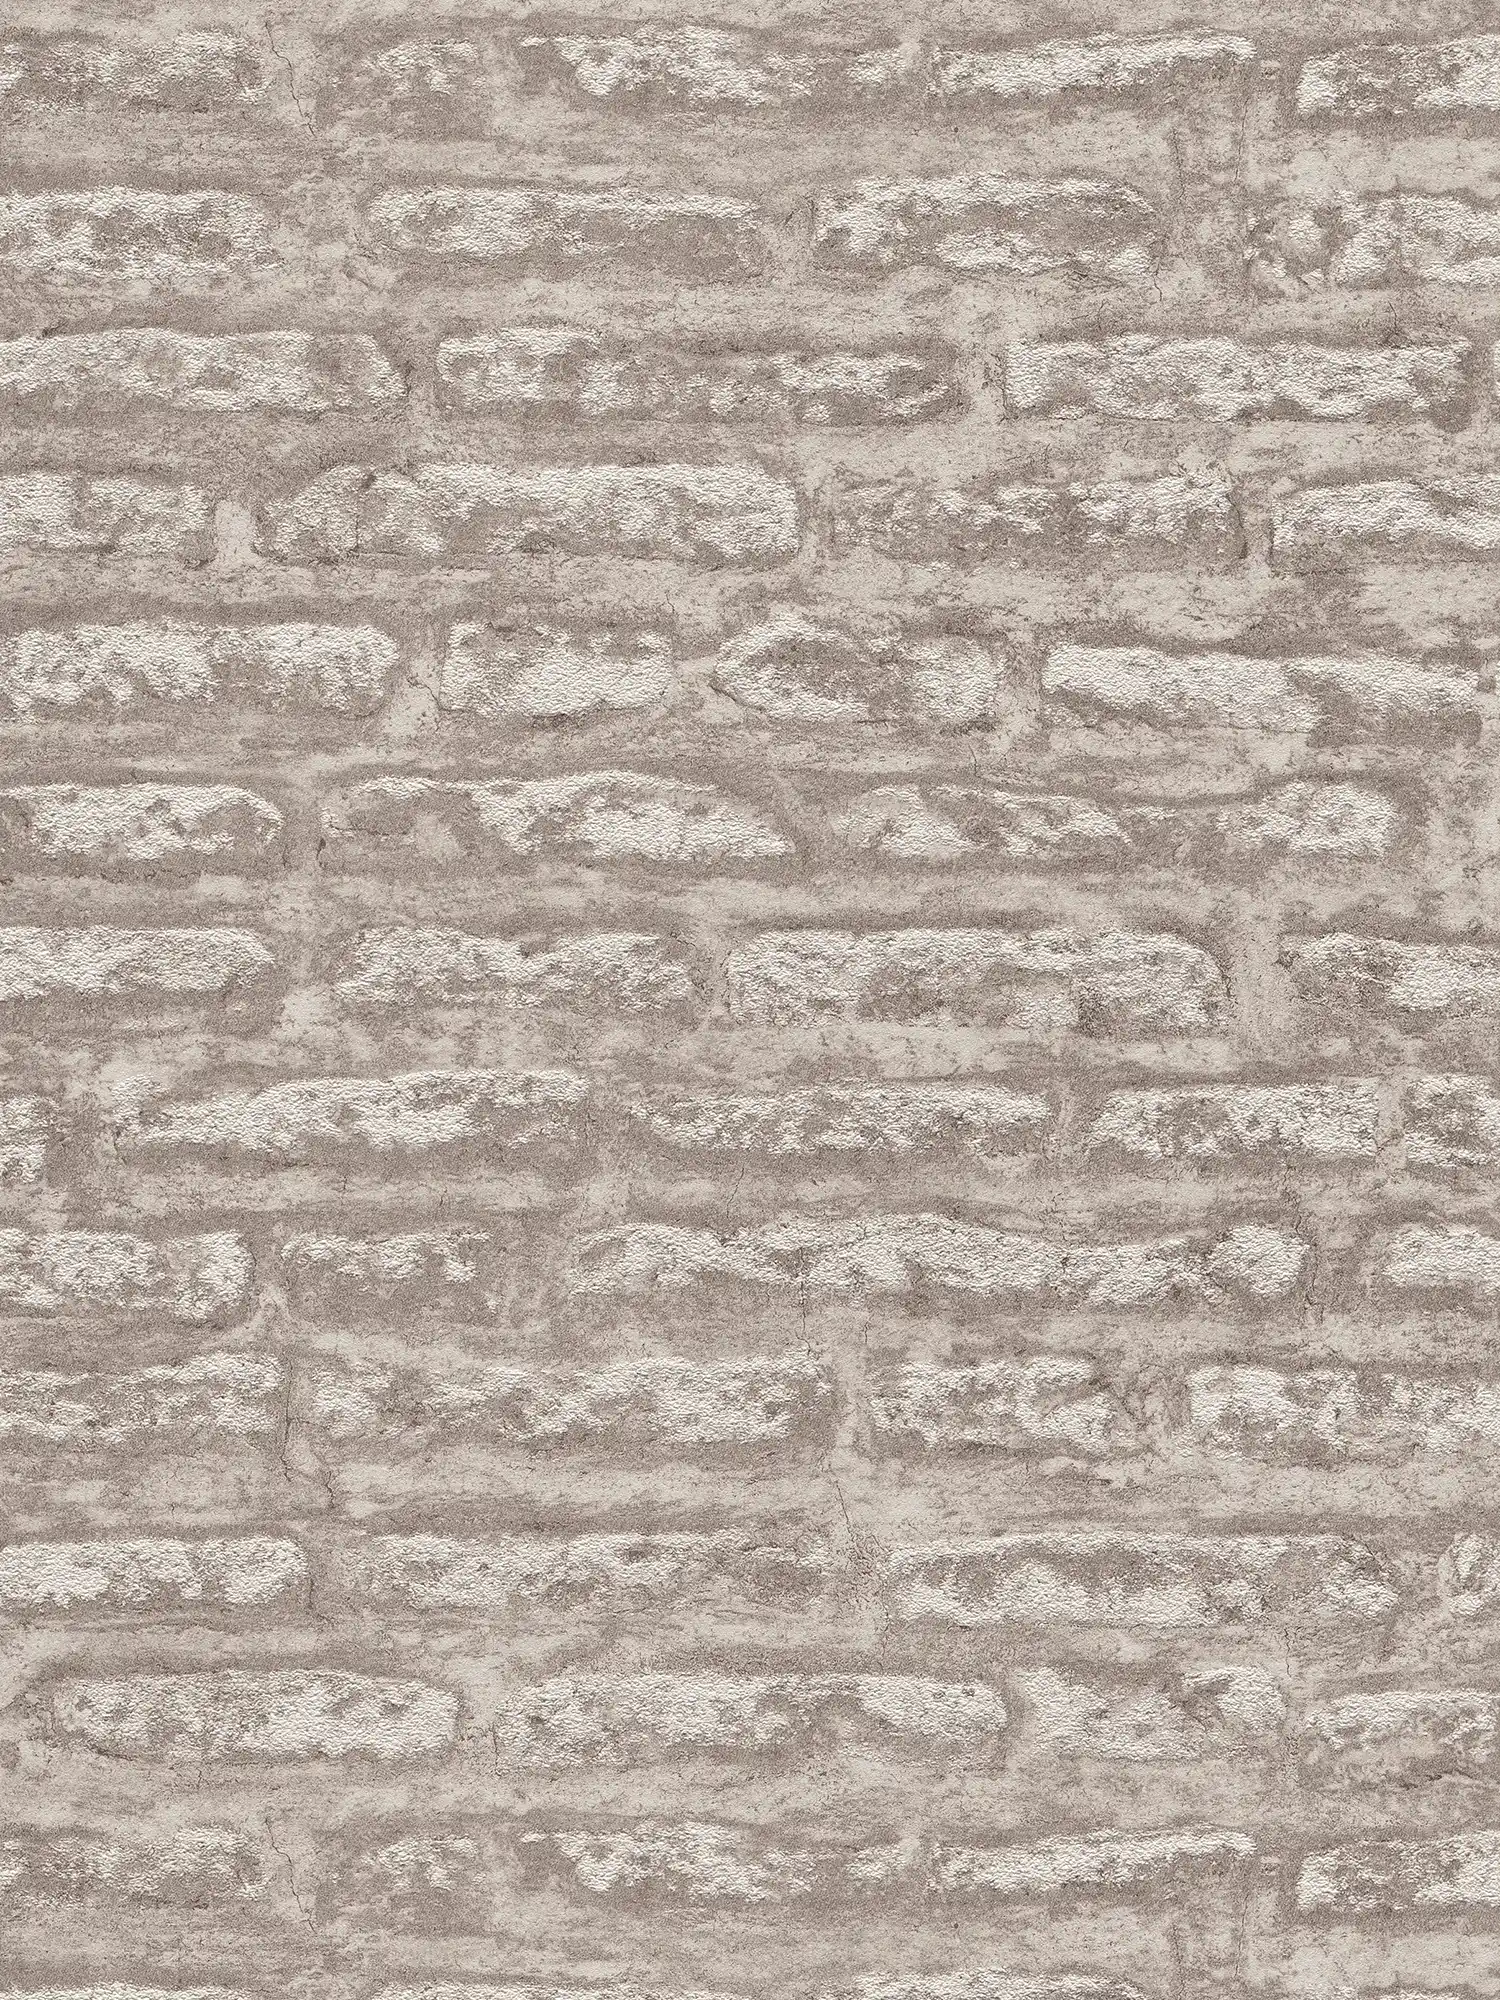 Mustertapete in Putzoptik matt – Grau, Braun, Weiß
